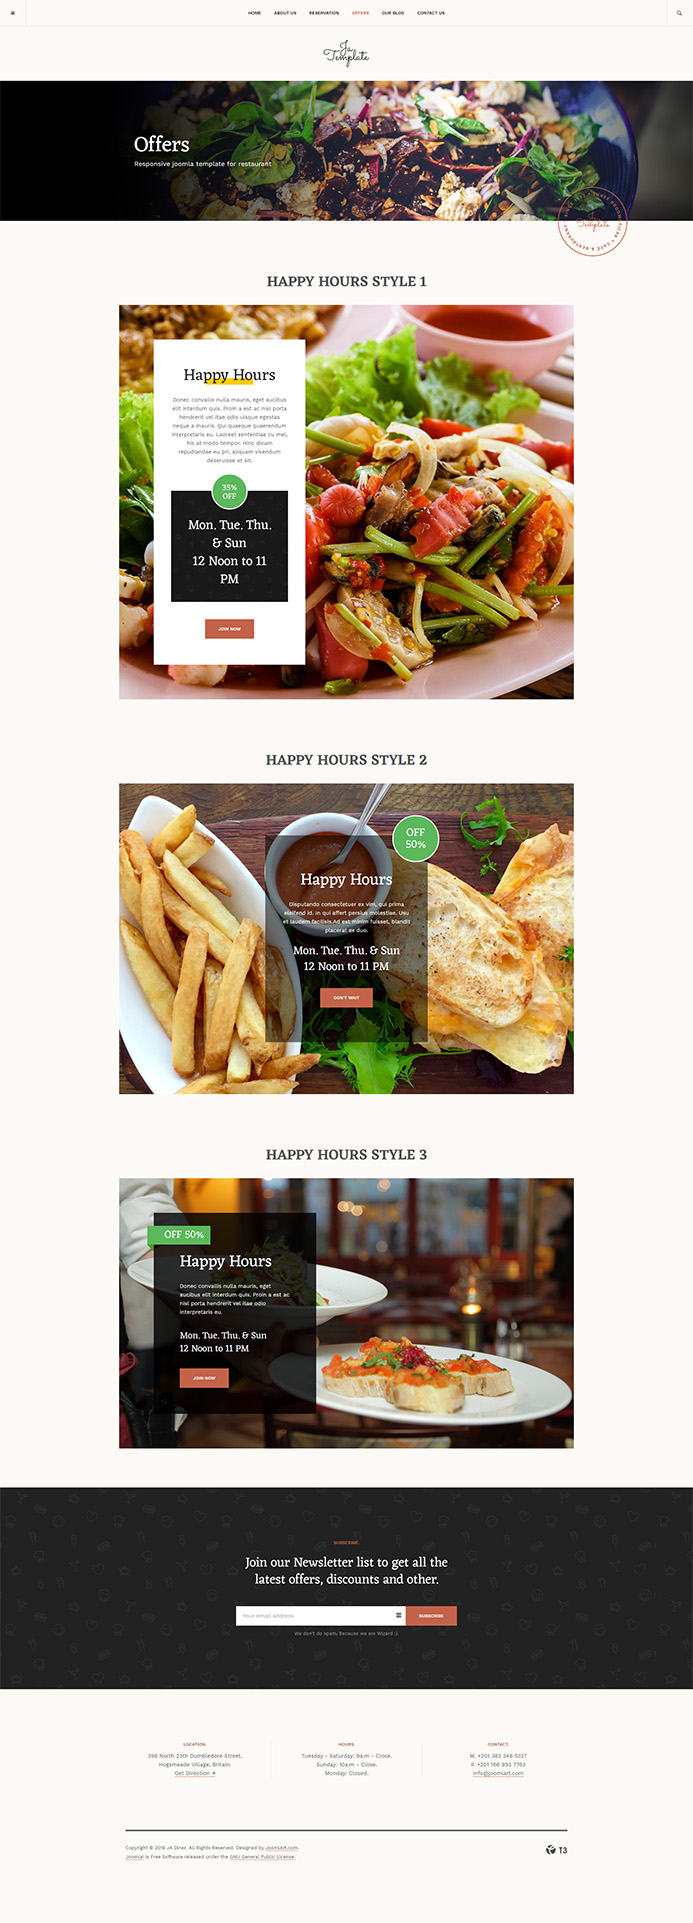 Restaurant joomla template offer page JA Diner